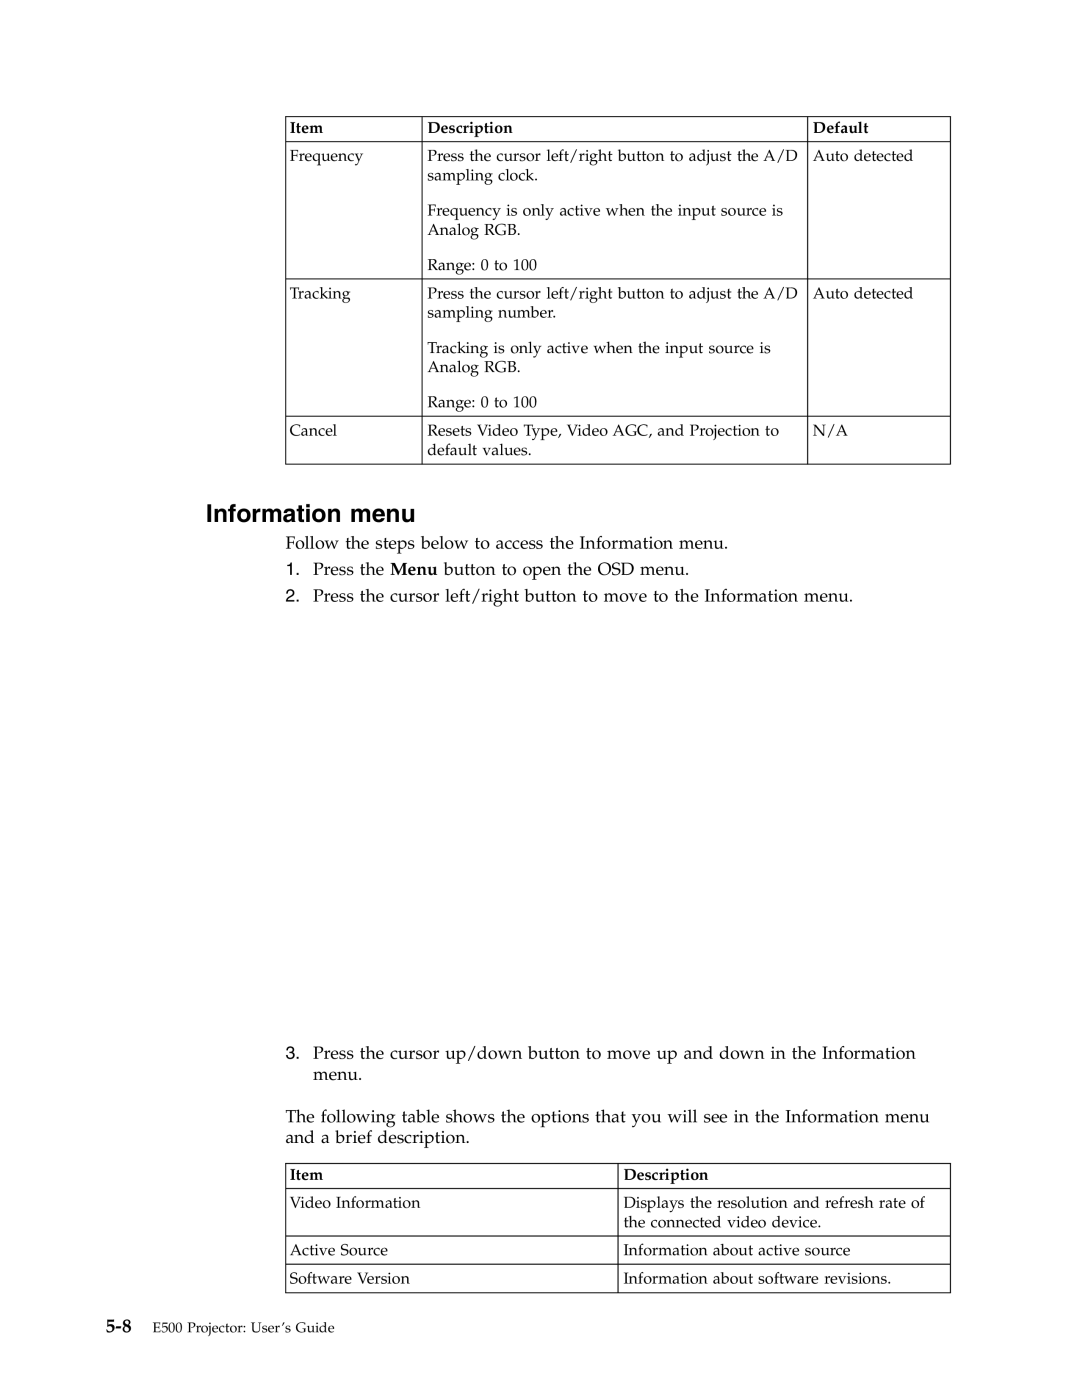 Lenovo E500 manual Information menu, Description 